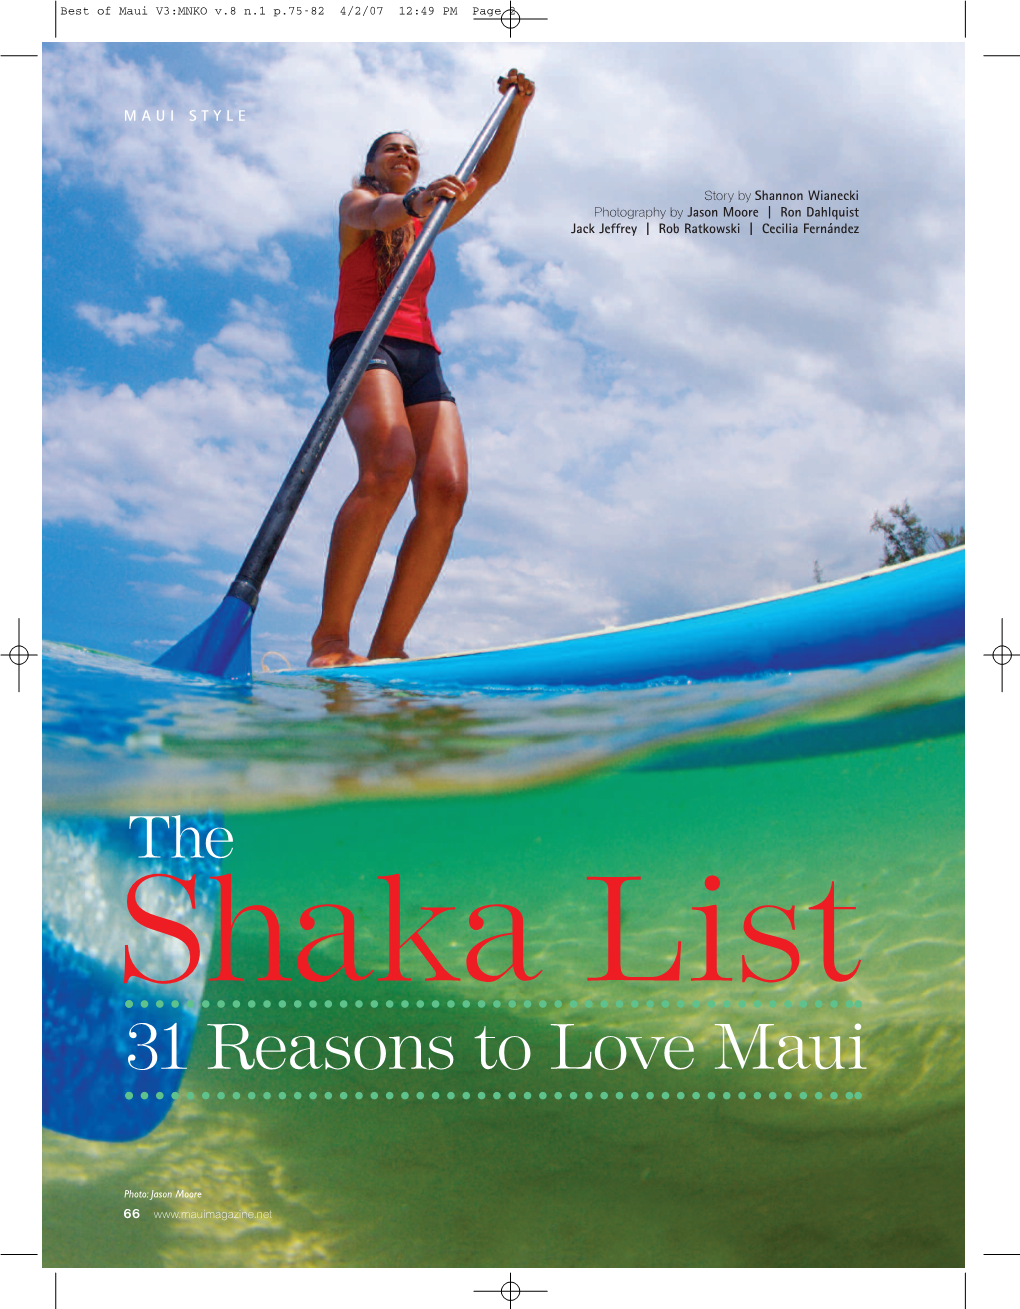 31 Reasons to Love Maui